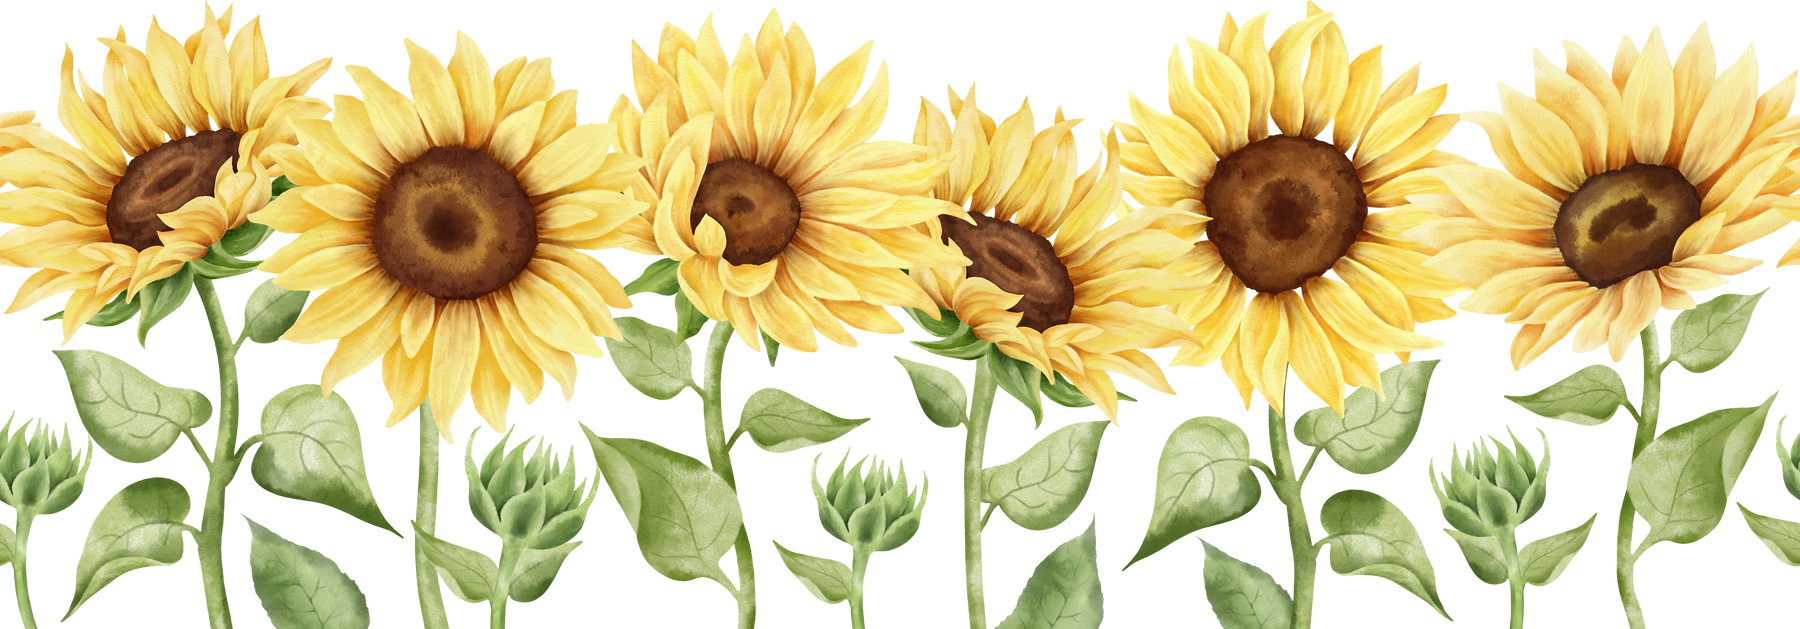 Watercolor sunflower seamless border